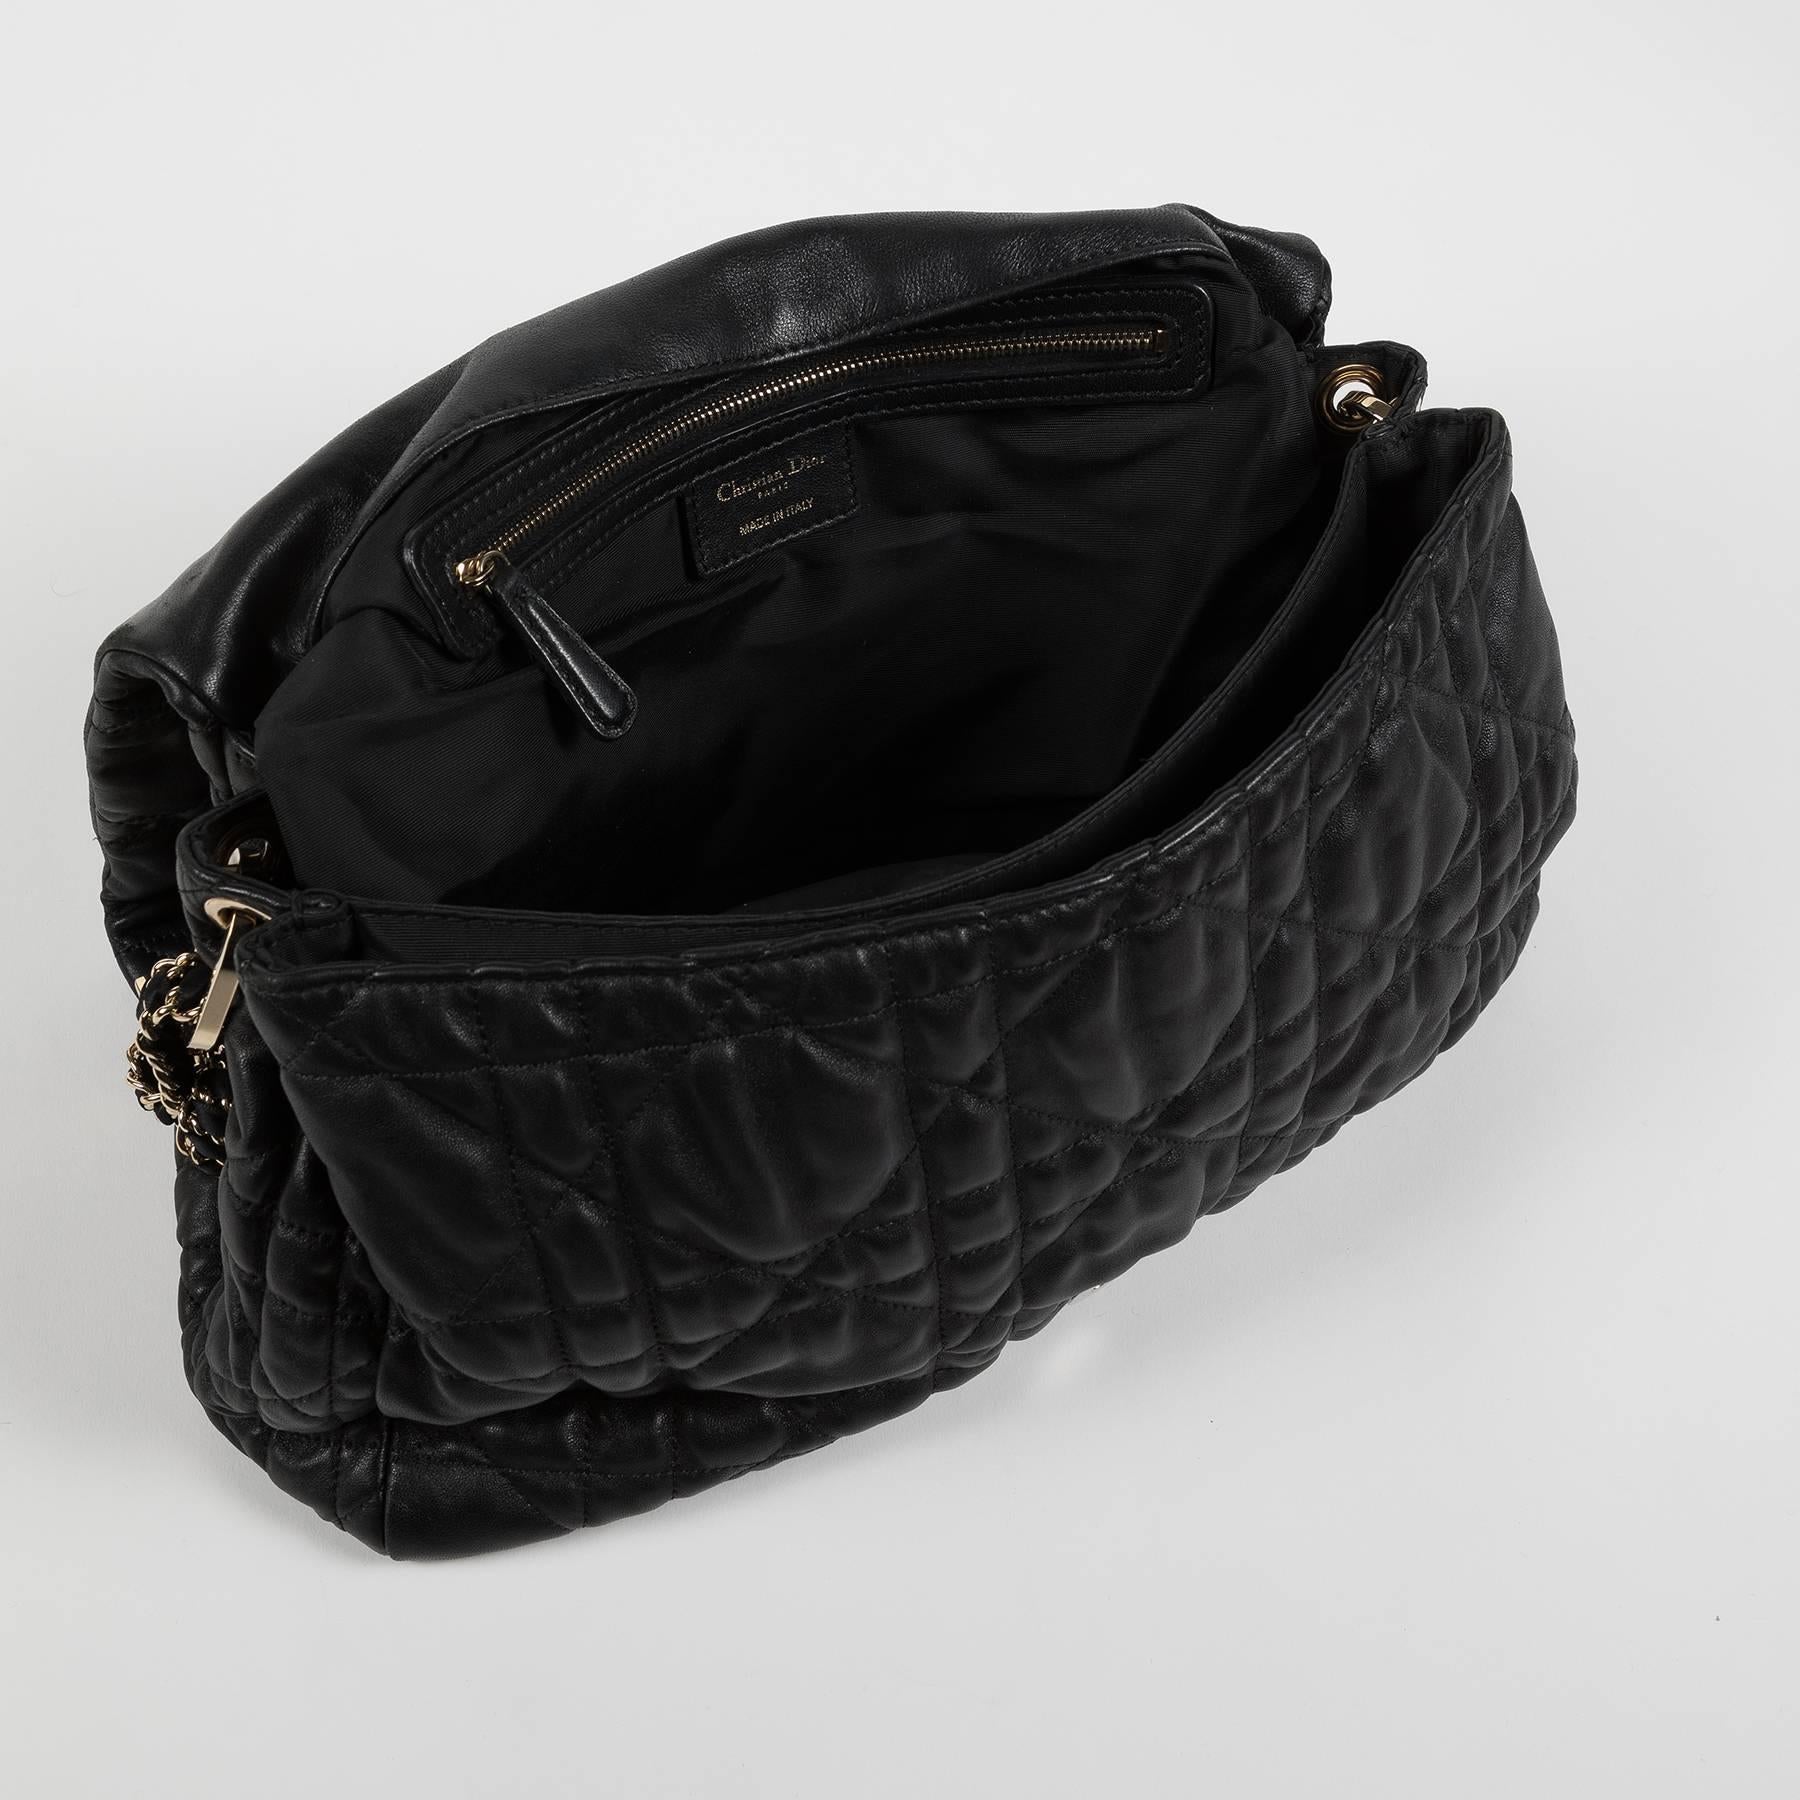 Christian Dior Black Matelasse Leather with Gold Hardwares Delice bag 2